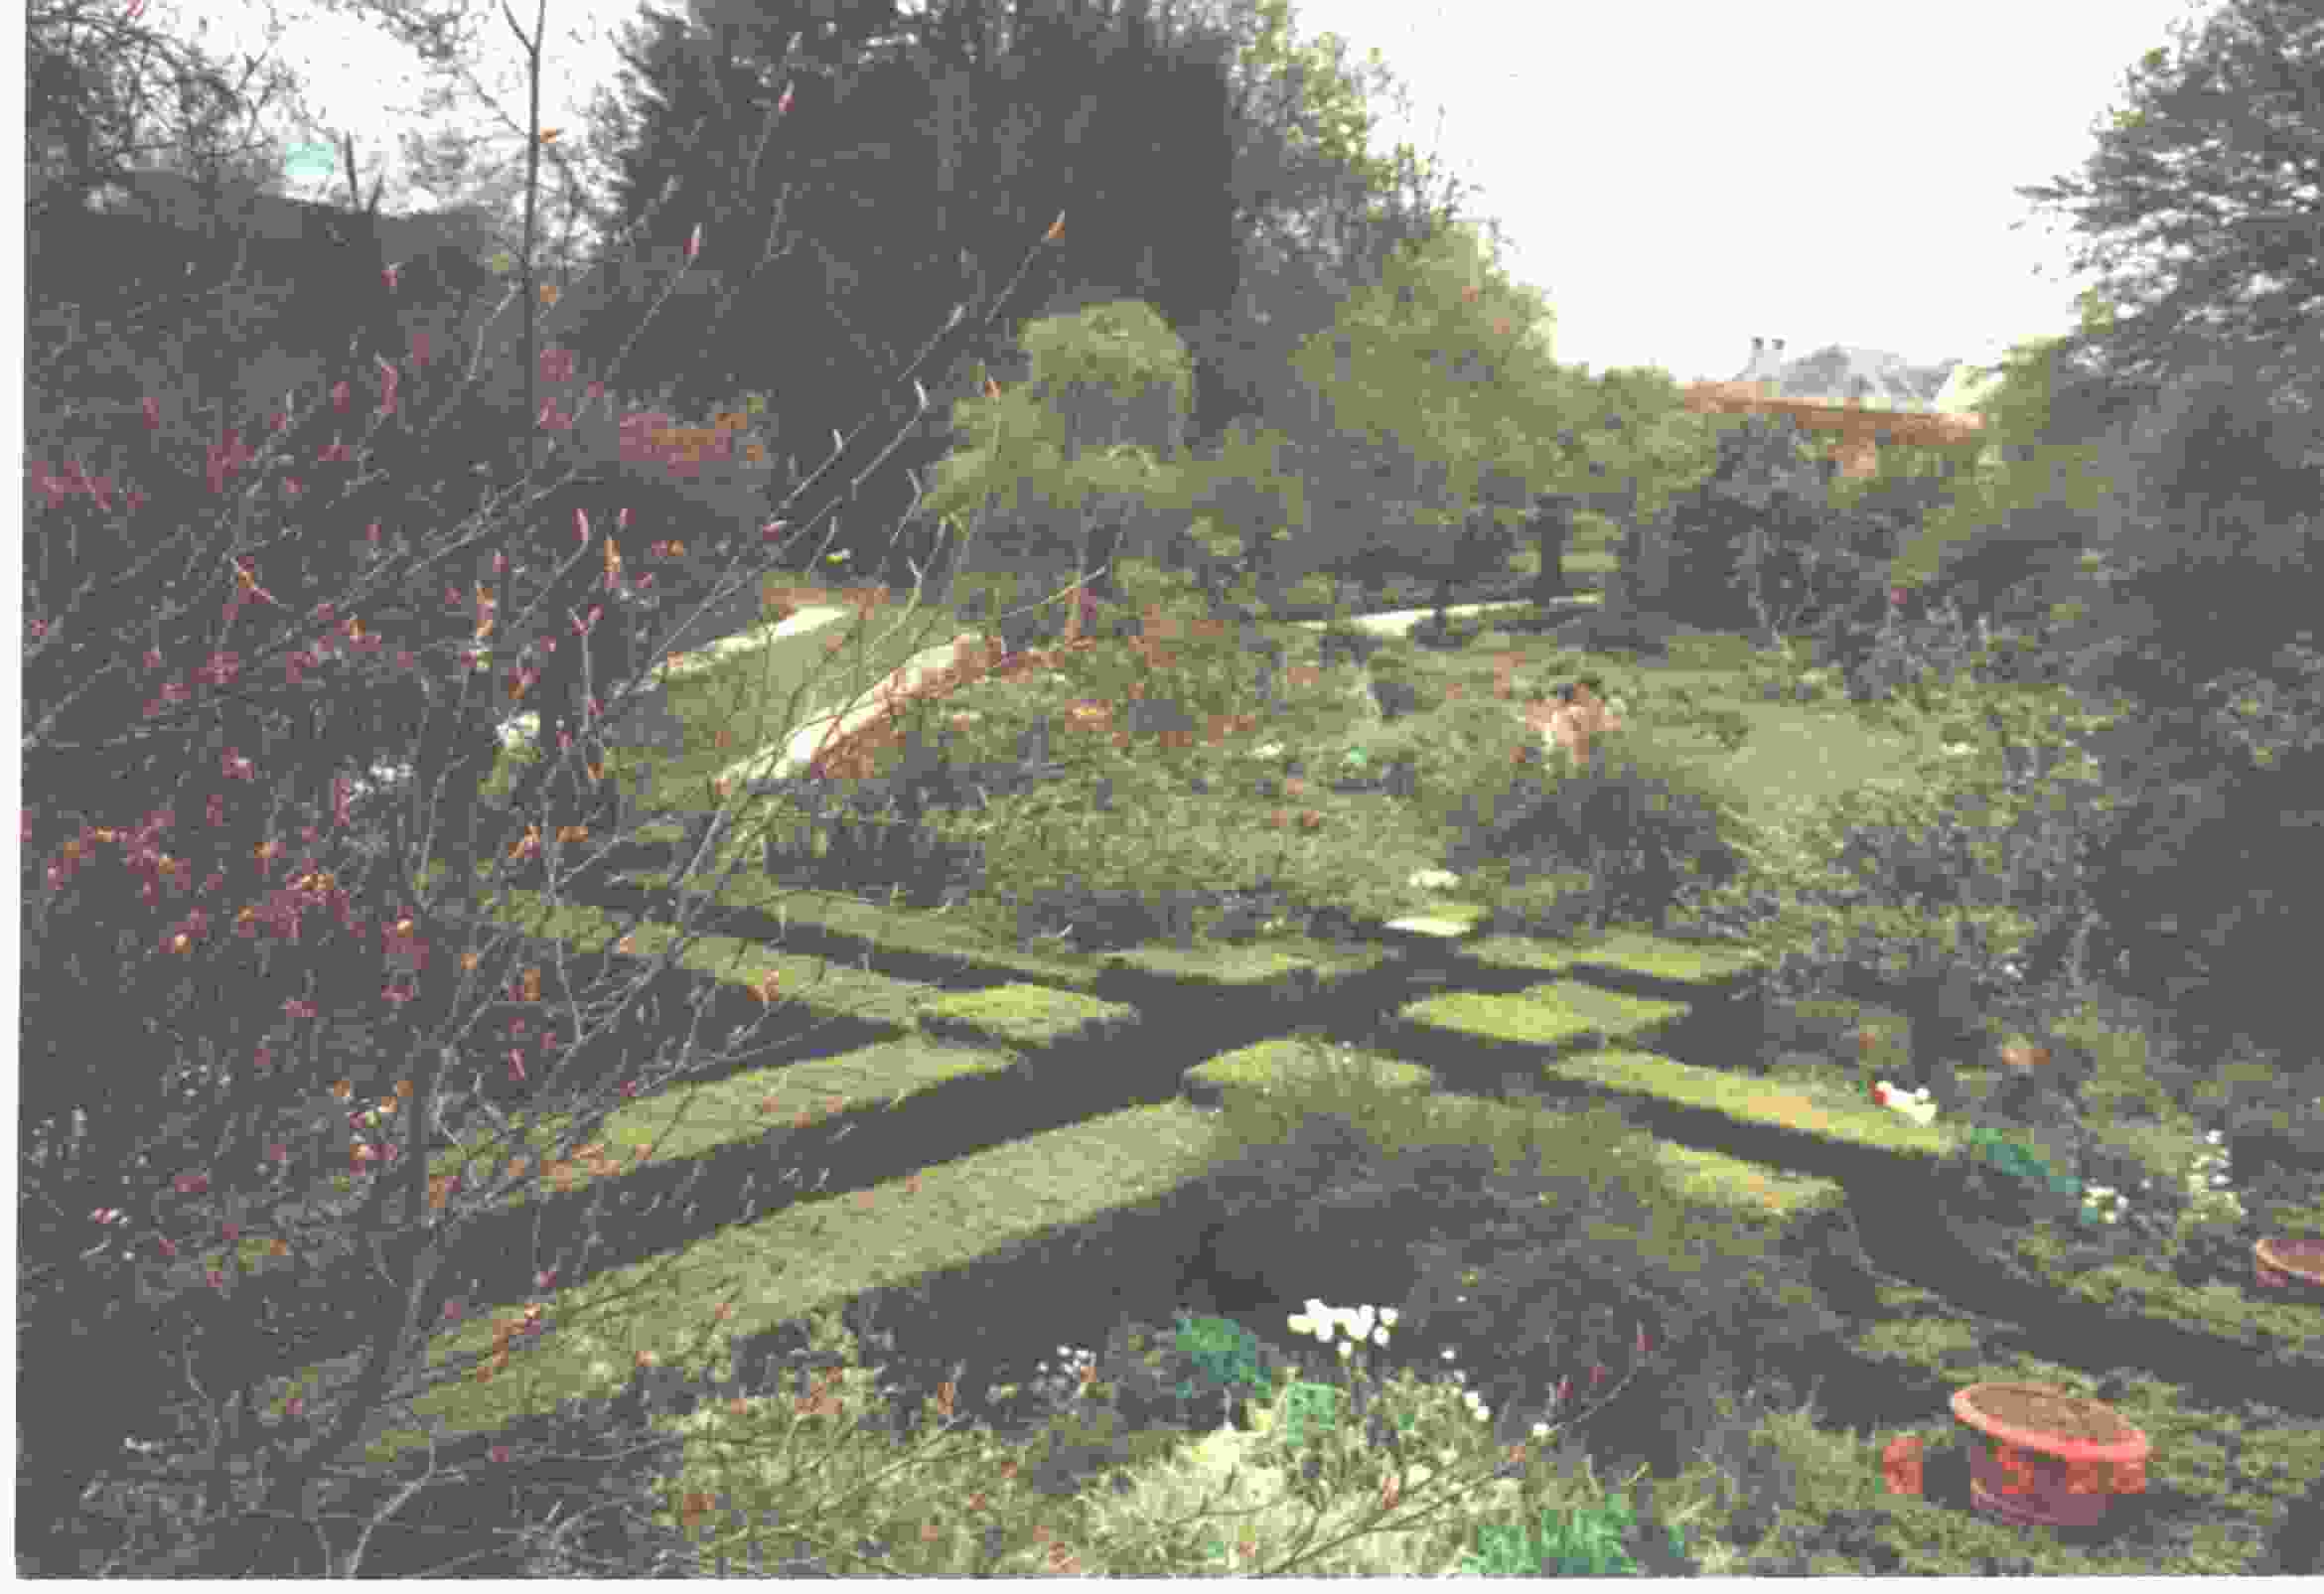 Butterstream Garden in May